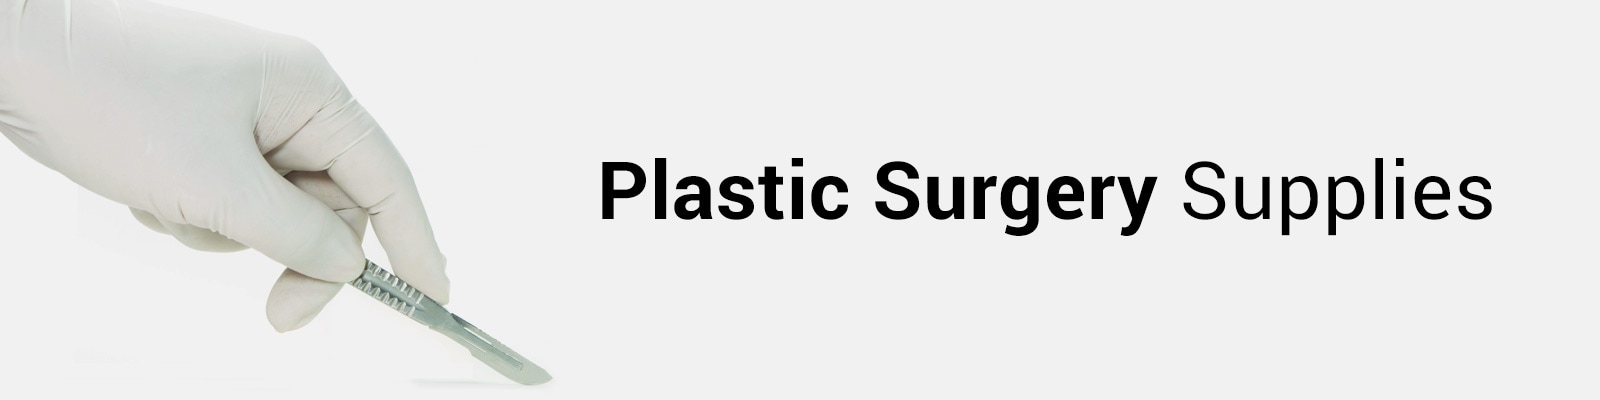 plastic surgery instruments